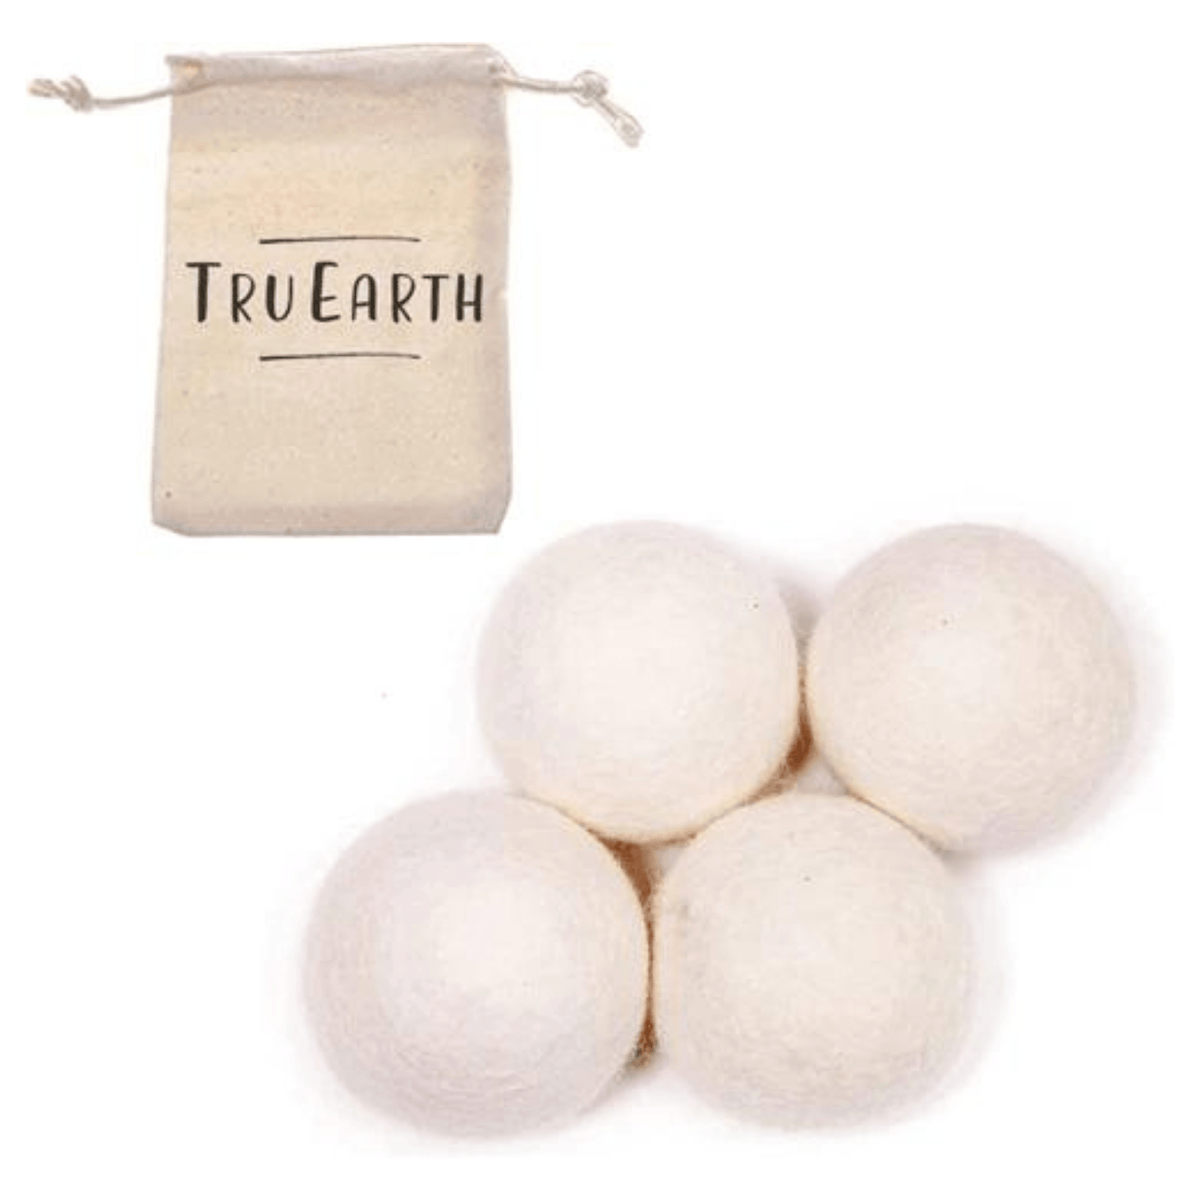 Primary Image of Wool Dryer Balls